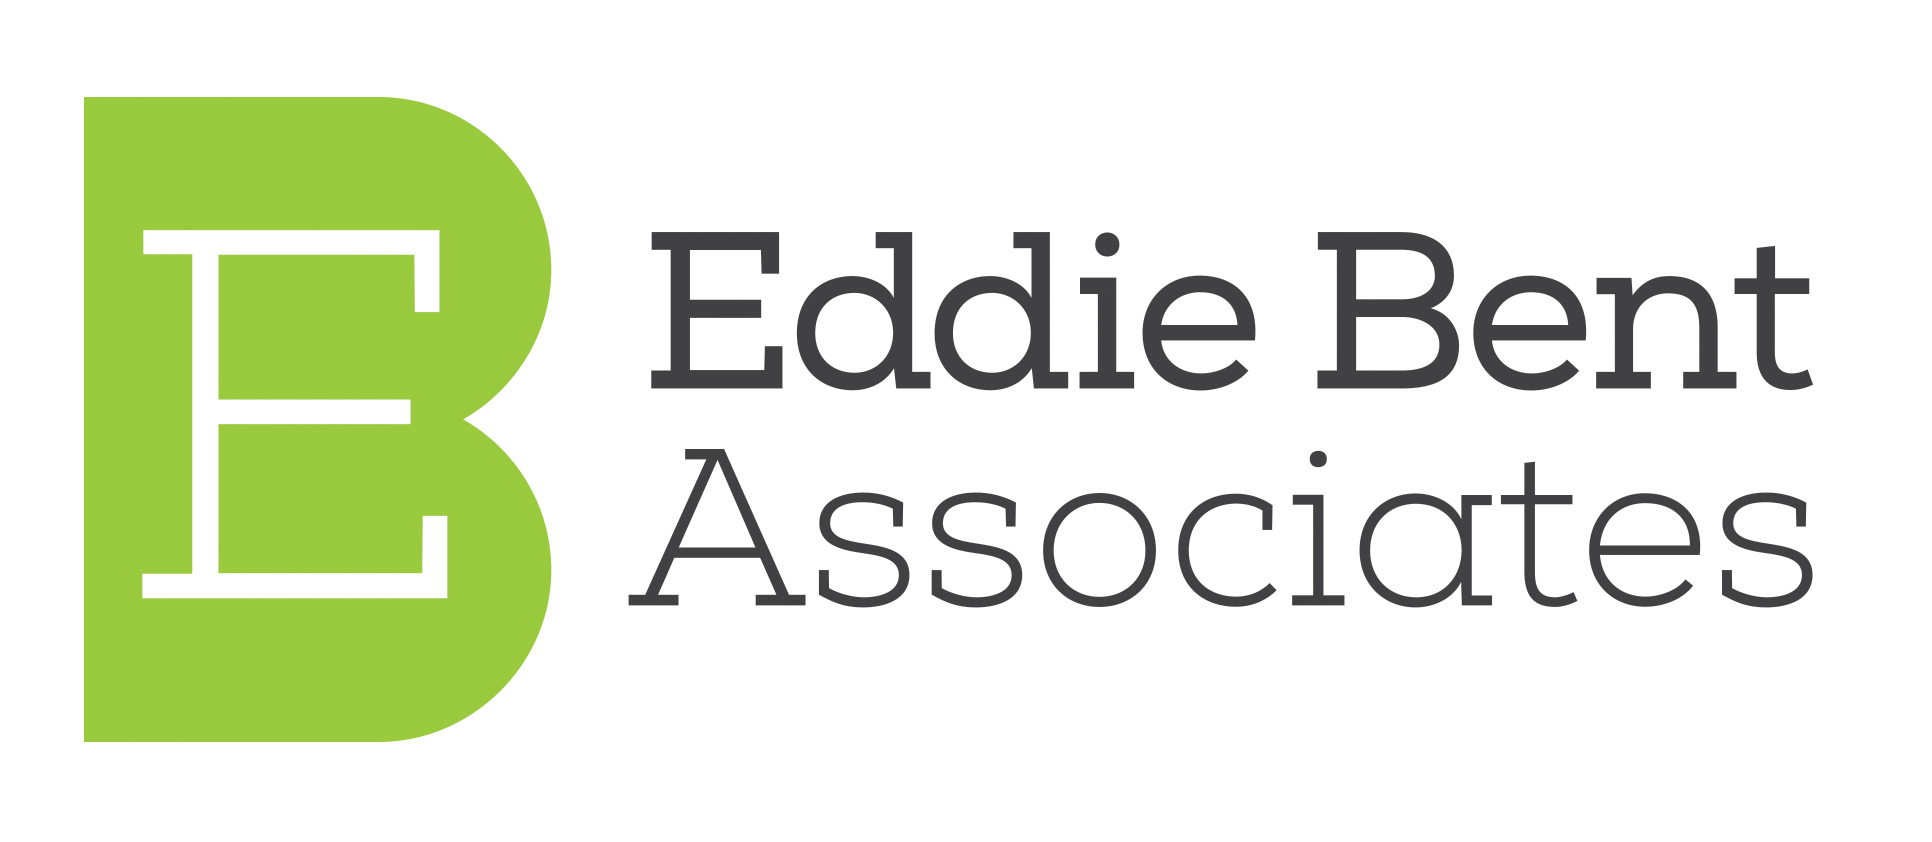 Eddie Bent Associates